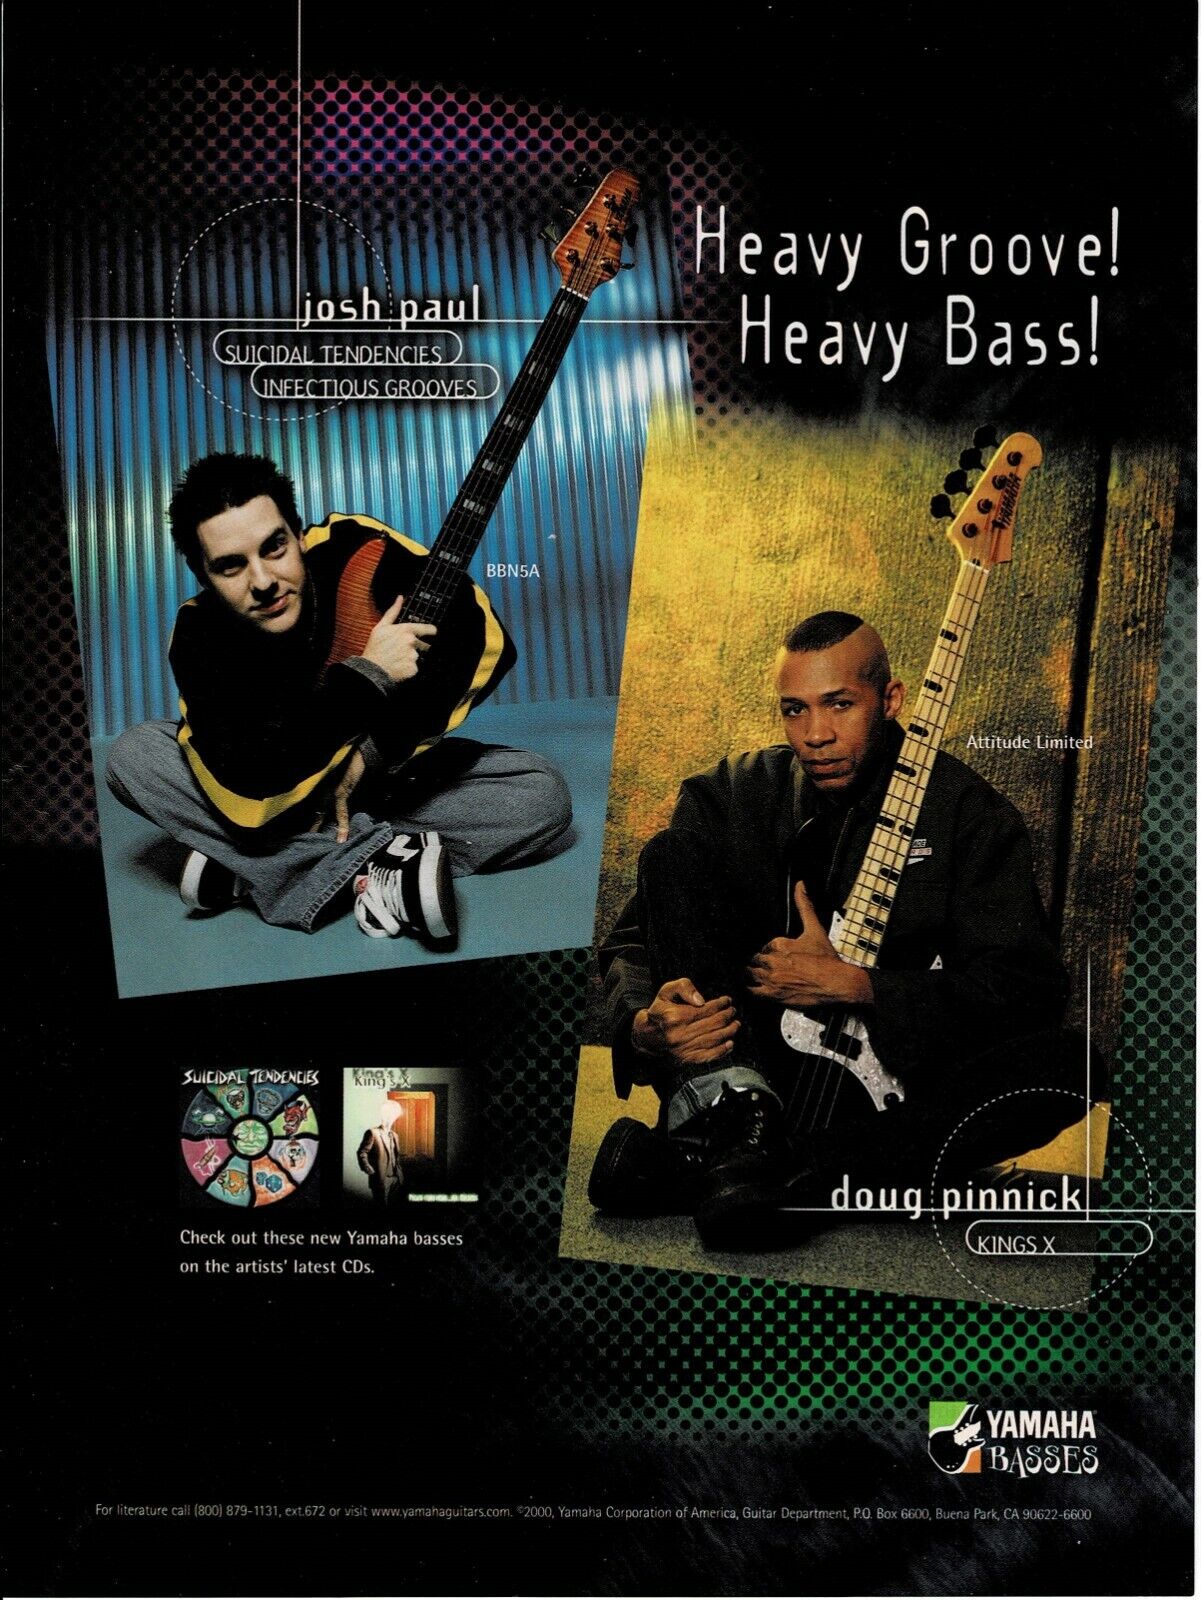 Yamaha Bass Guitars - Josh Paul / Doug Pinnick - 2000 Print Ad